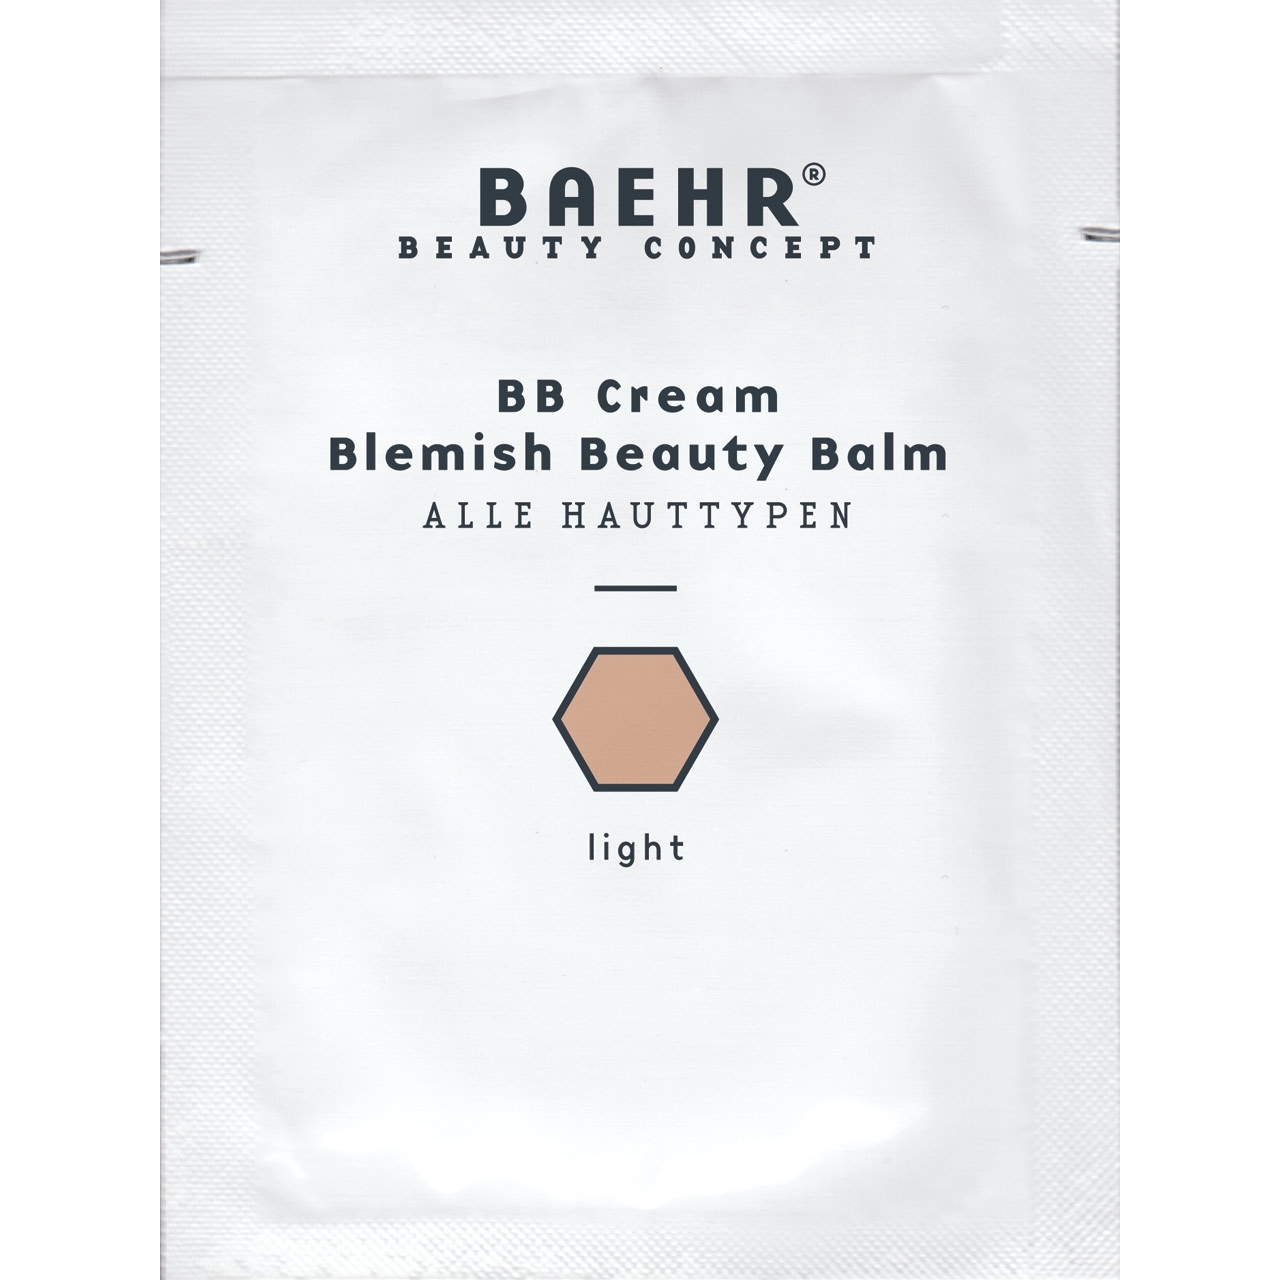 BAEHR BEAUTY CONCEPT - BB Cream light Blemish Beauty Balm, Sachet 2 ml -